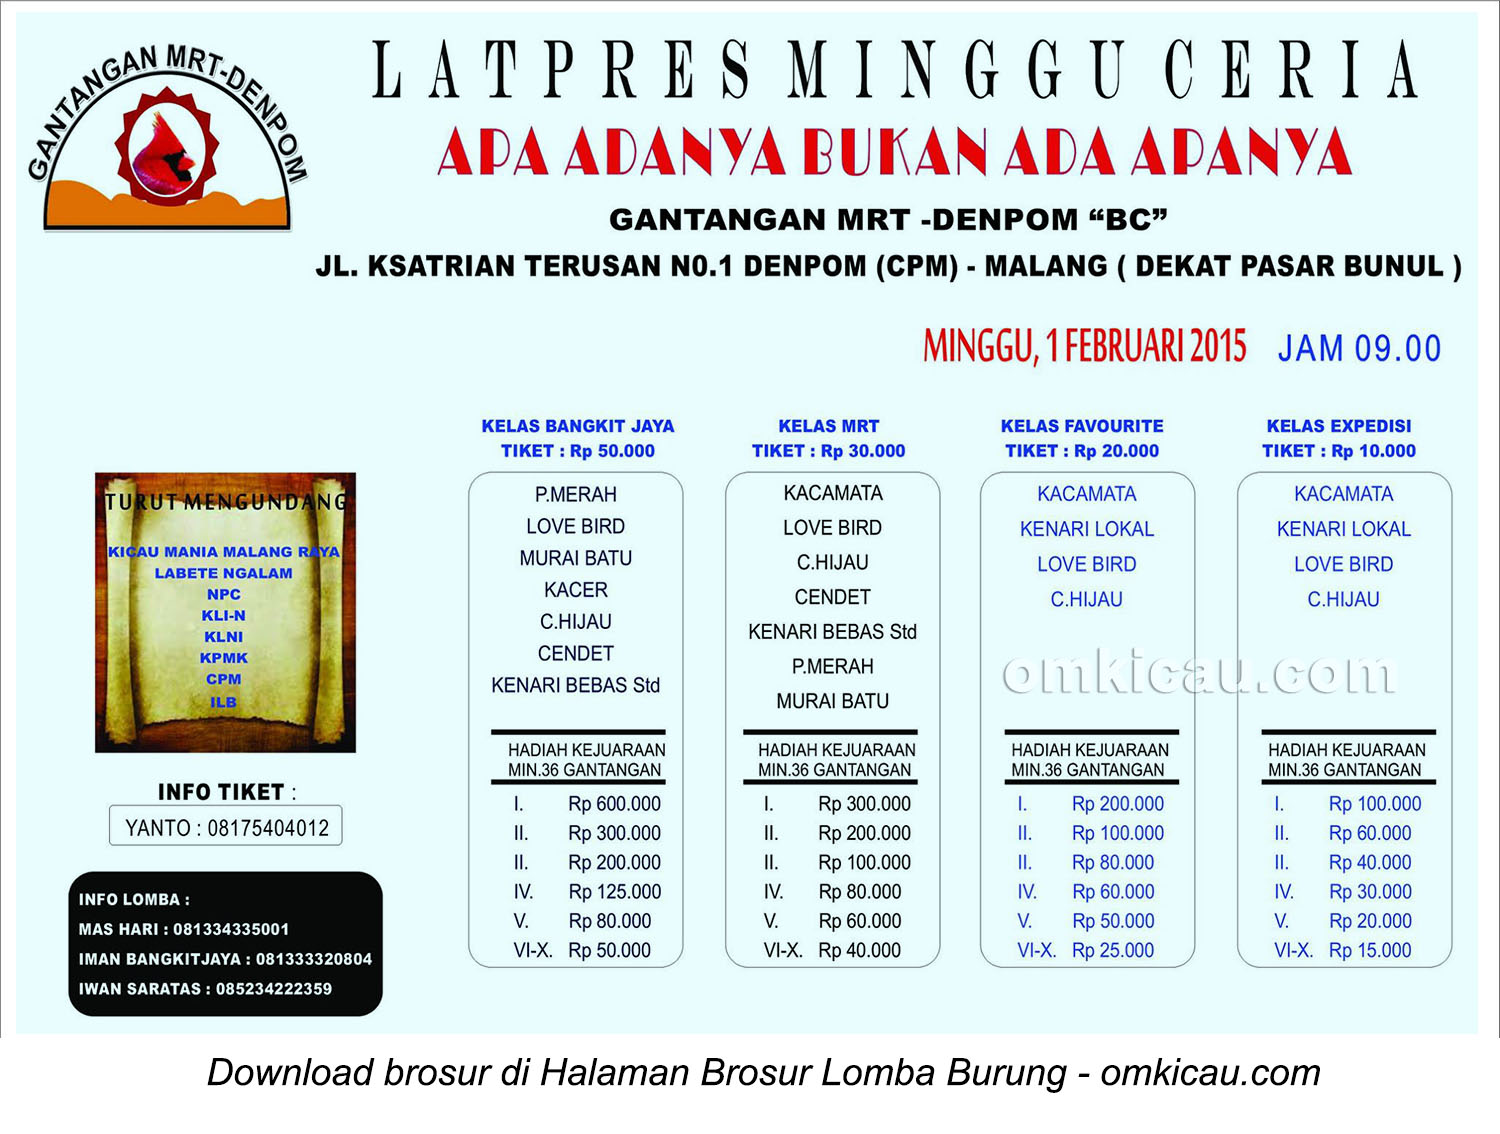 Brosur Latpres Minggu Ceria Gantangan MRT-Denpom BC, Malang, 1 Februari 2015